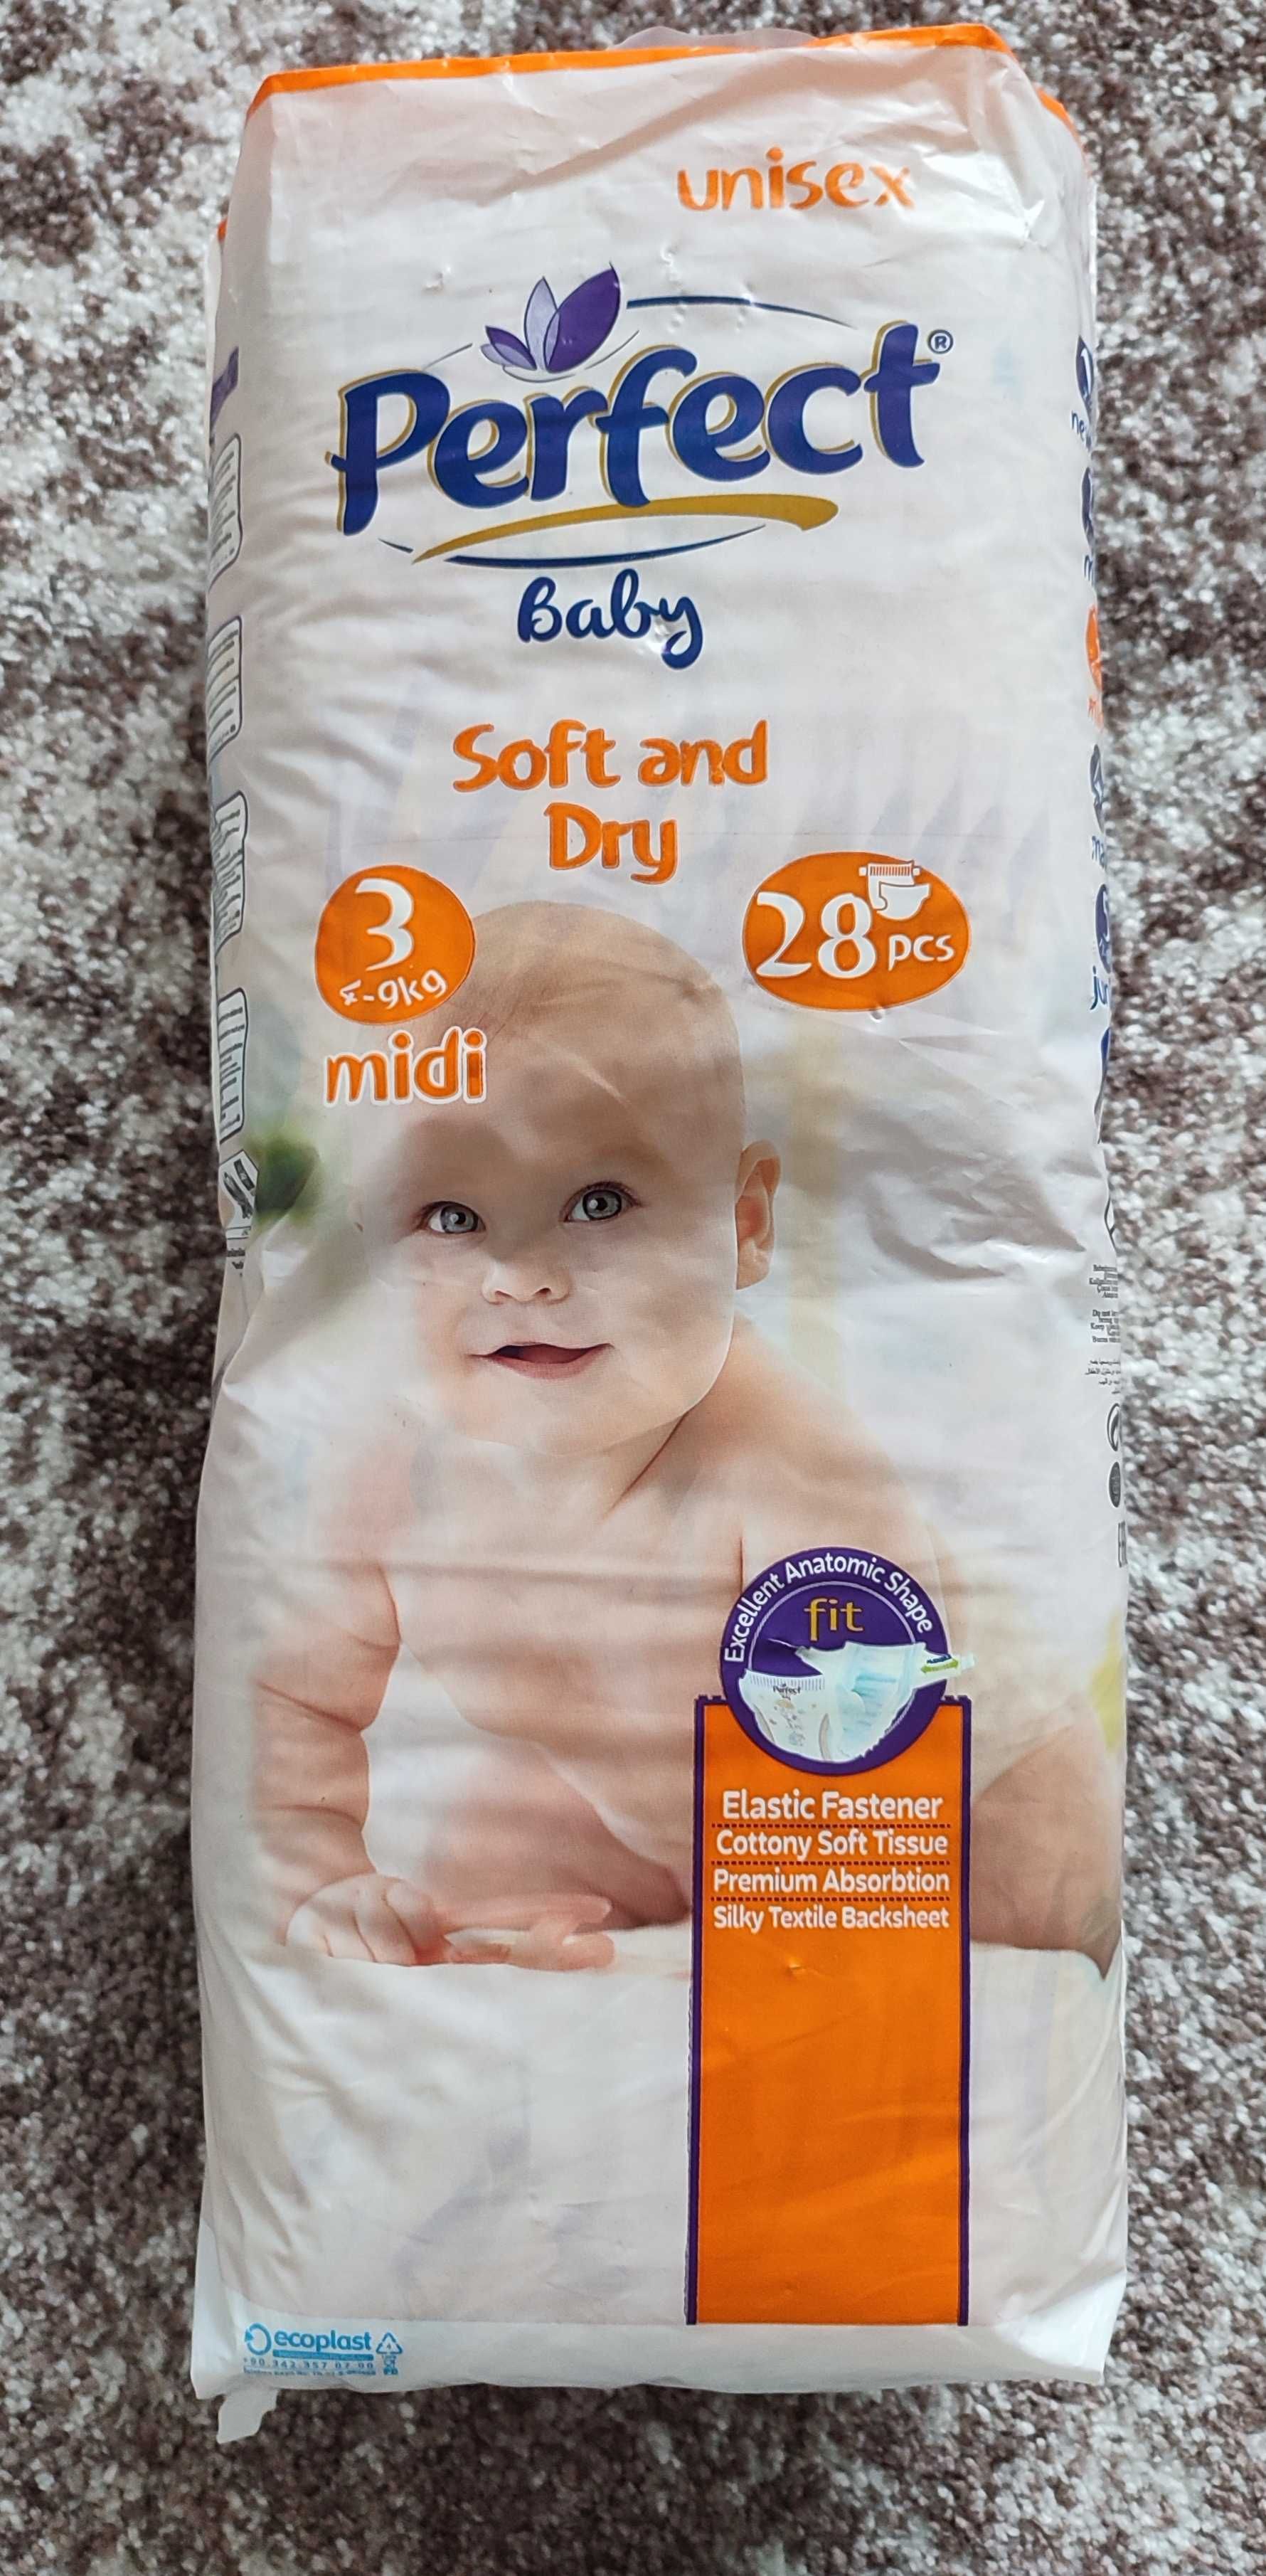 Памперси Baby Ultra Dry